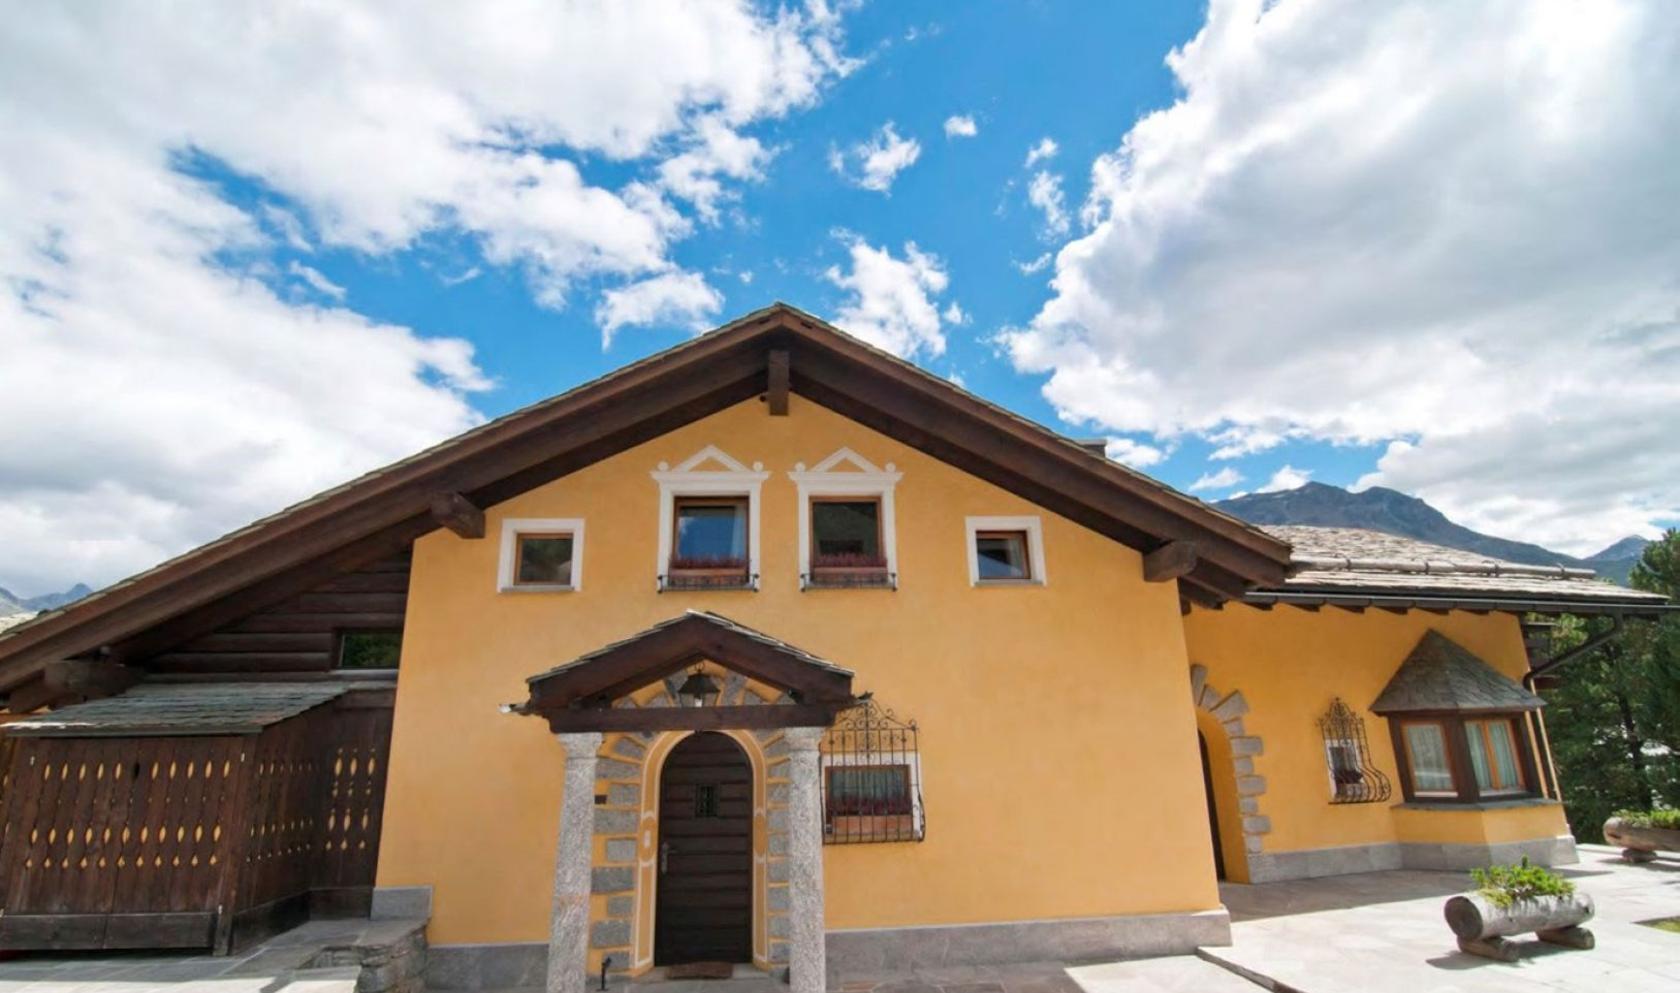 Toscana Immobiliare - Chalet in vendita a St Moritz